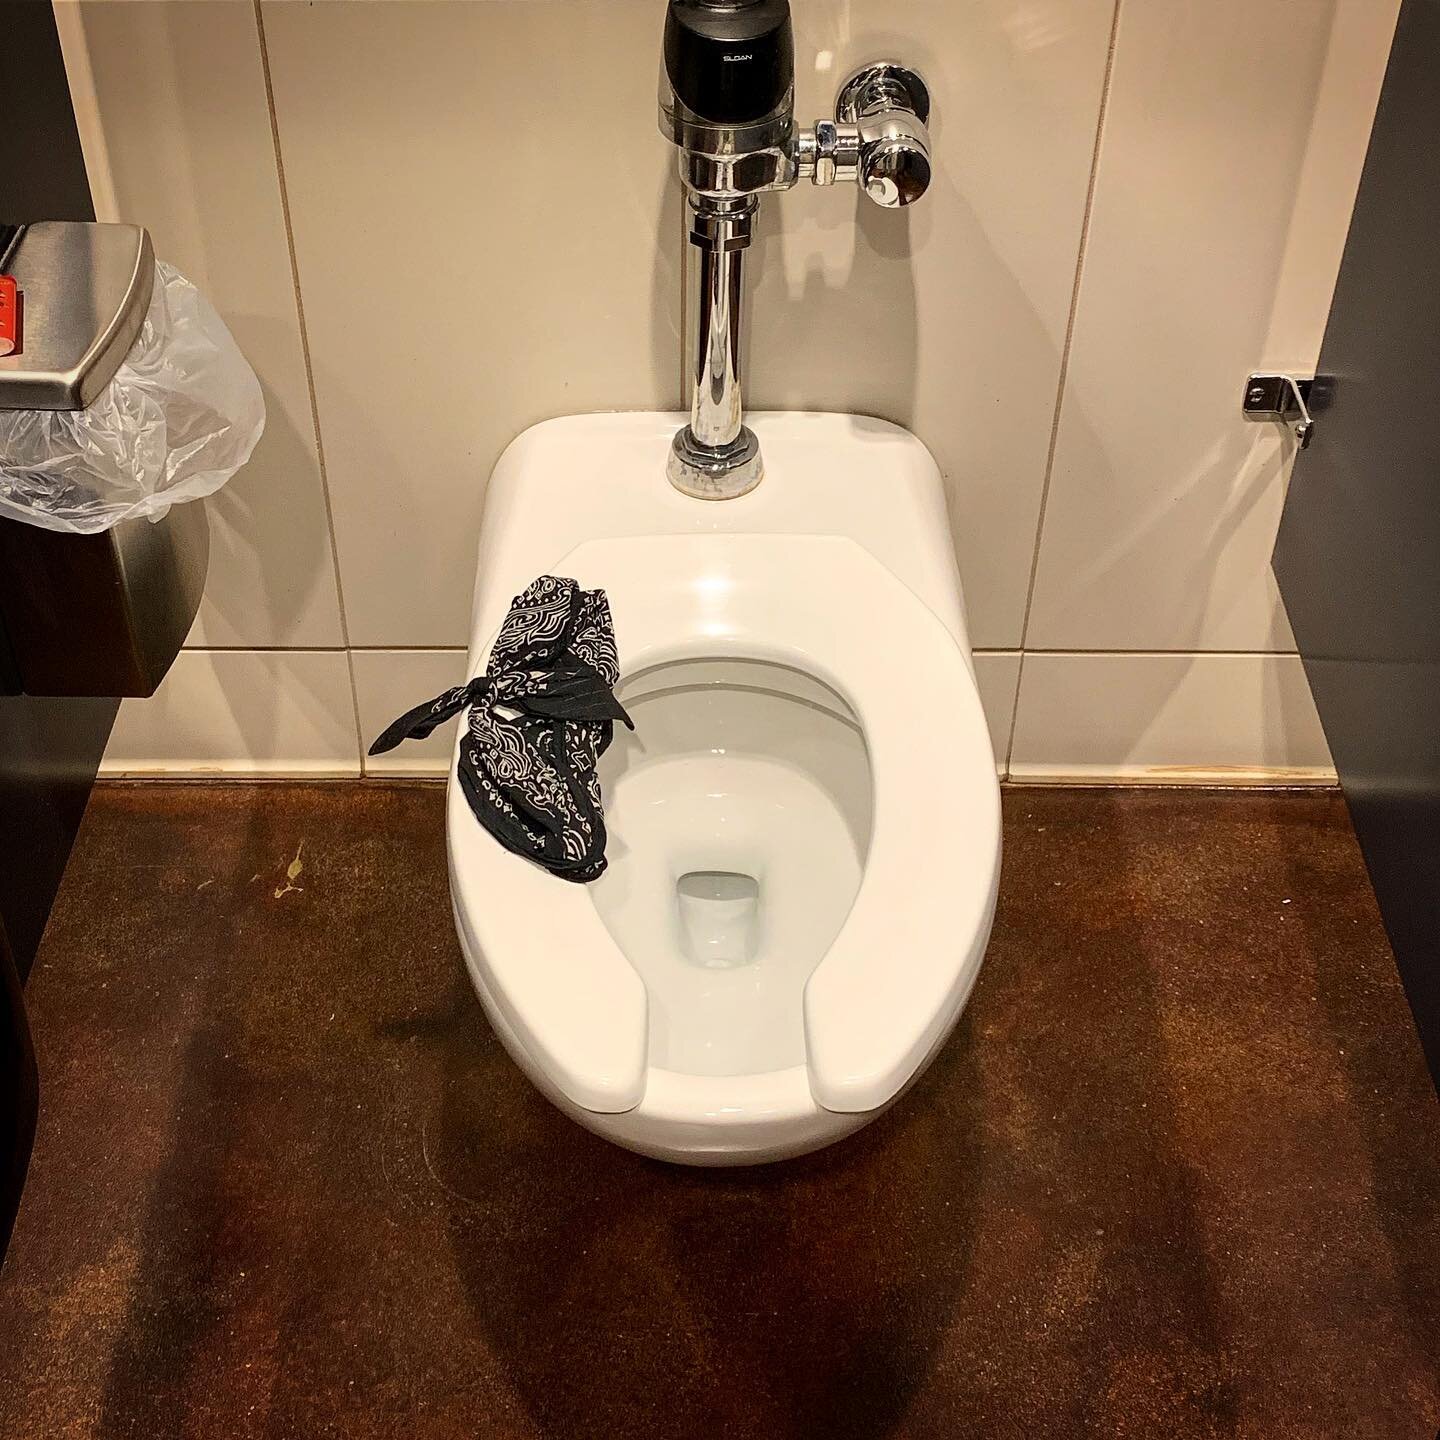 Black handkerchief on toilet means...